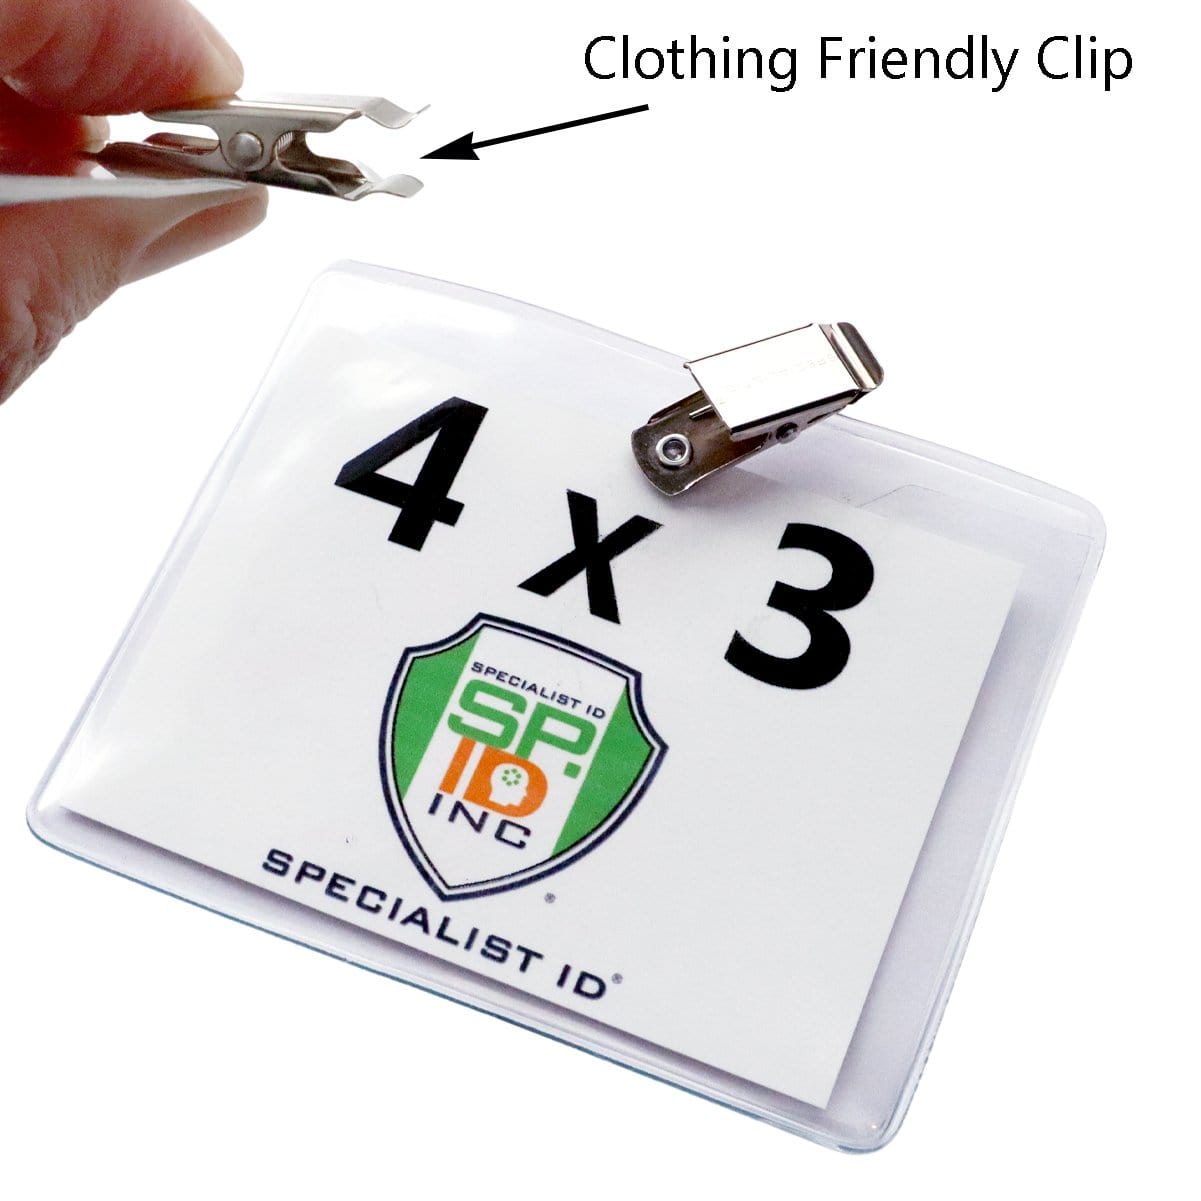 Clear Plastic Waterproof ID Holder w/ Badge Clip